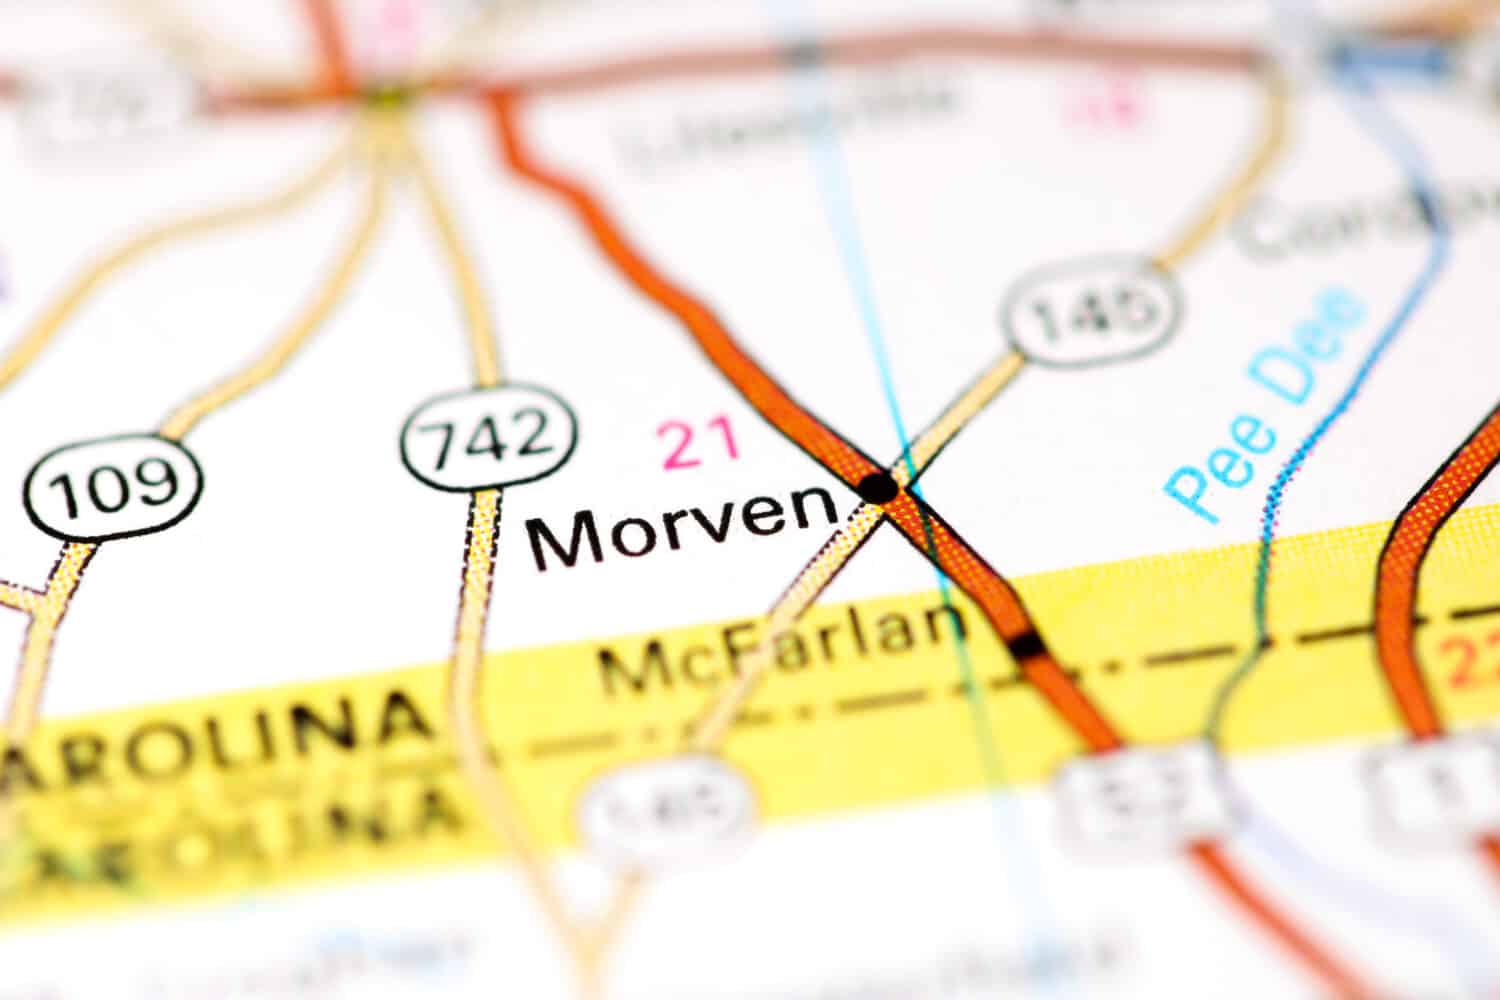 Morven. North Carolina. USA on a map